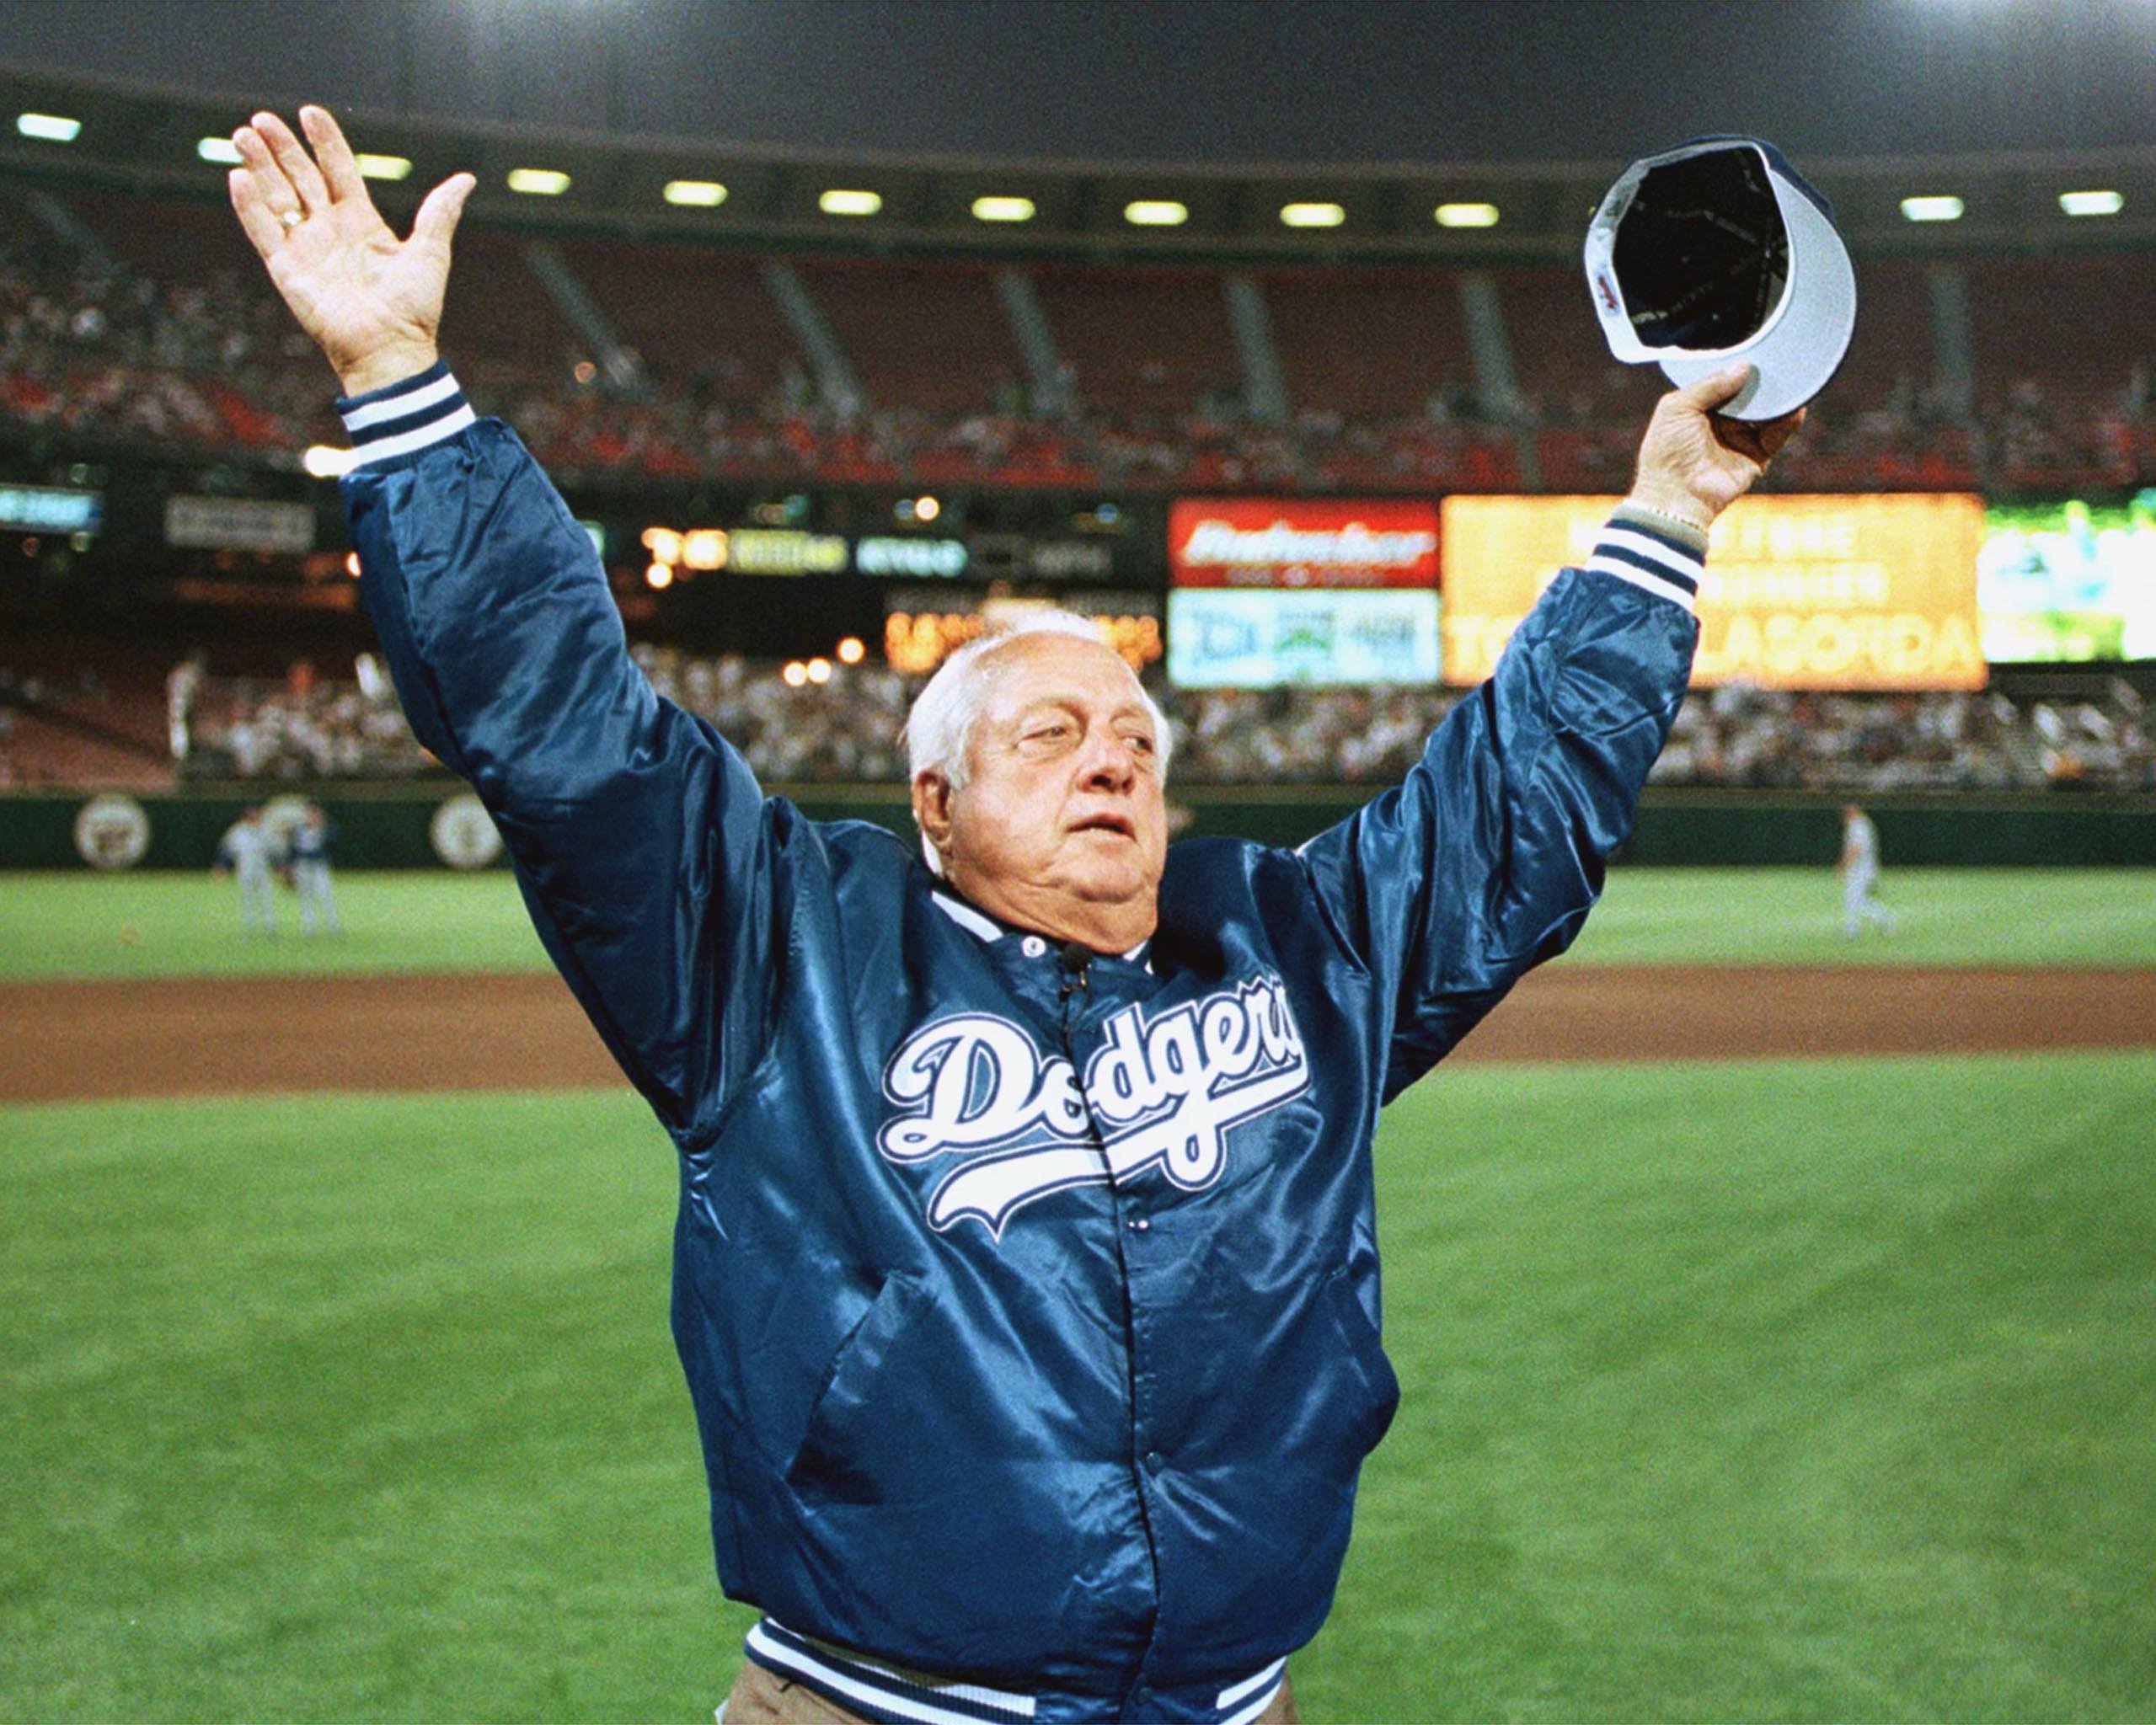 Dodgers' Legend Tommy Lasorda Dies at 93